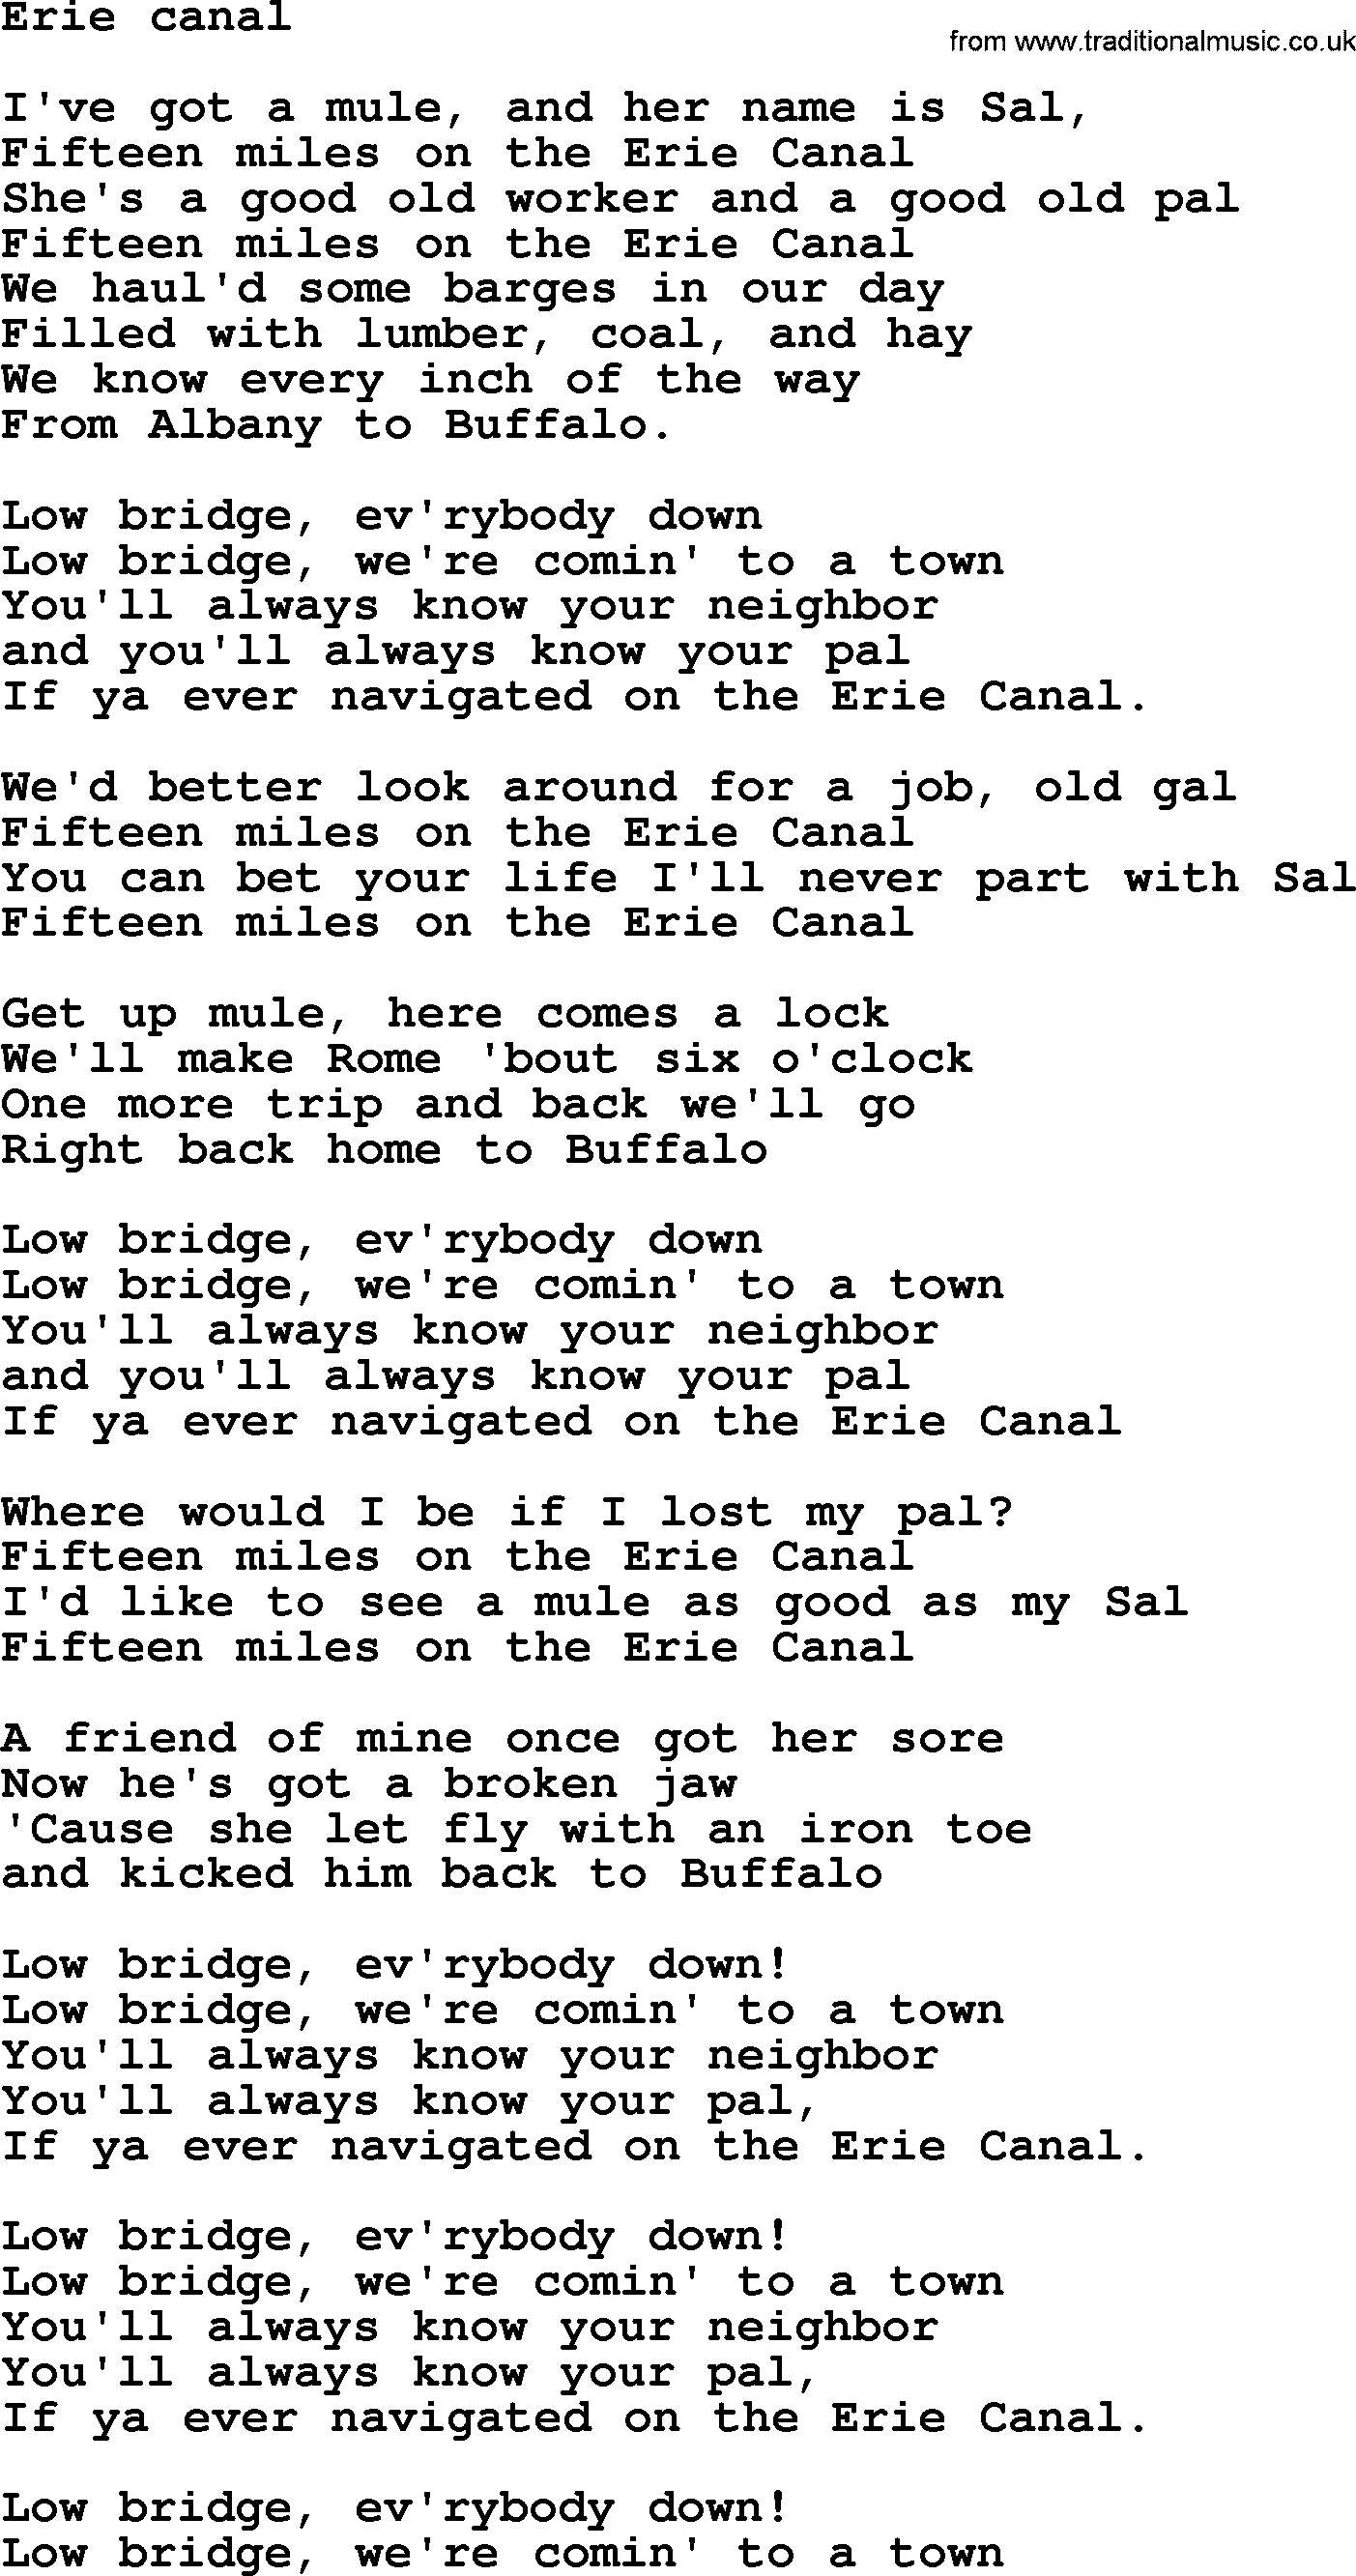 Bruce Springsteen song: Erie Canal lyrics